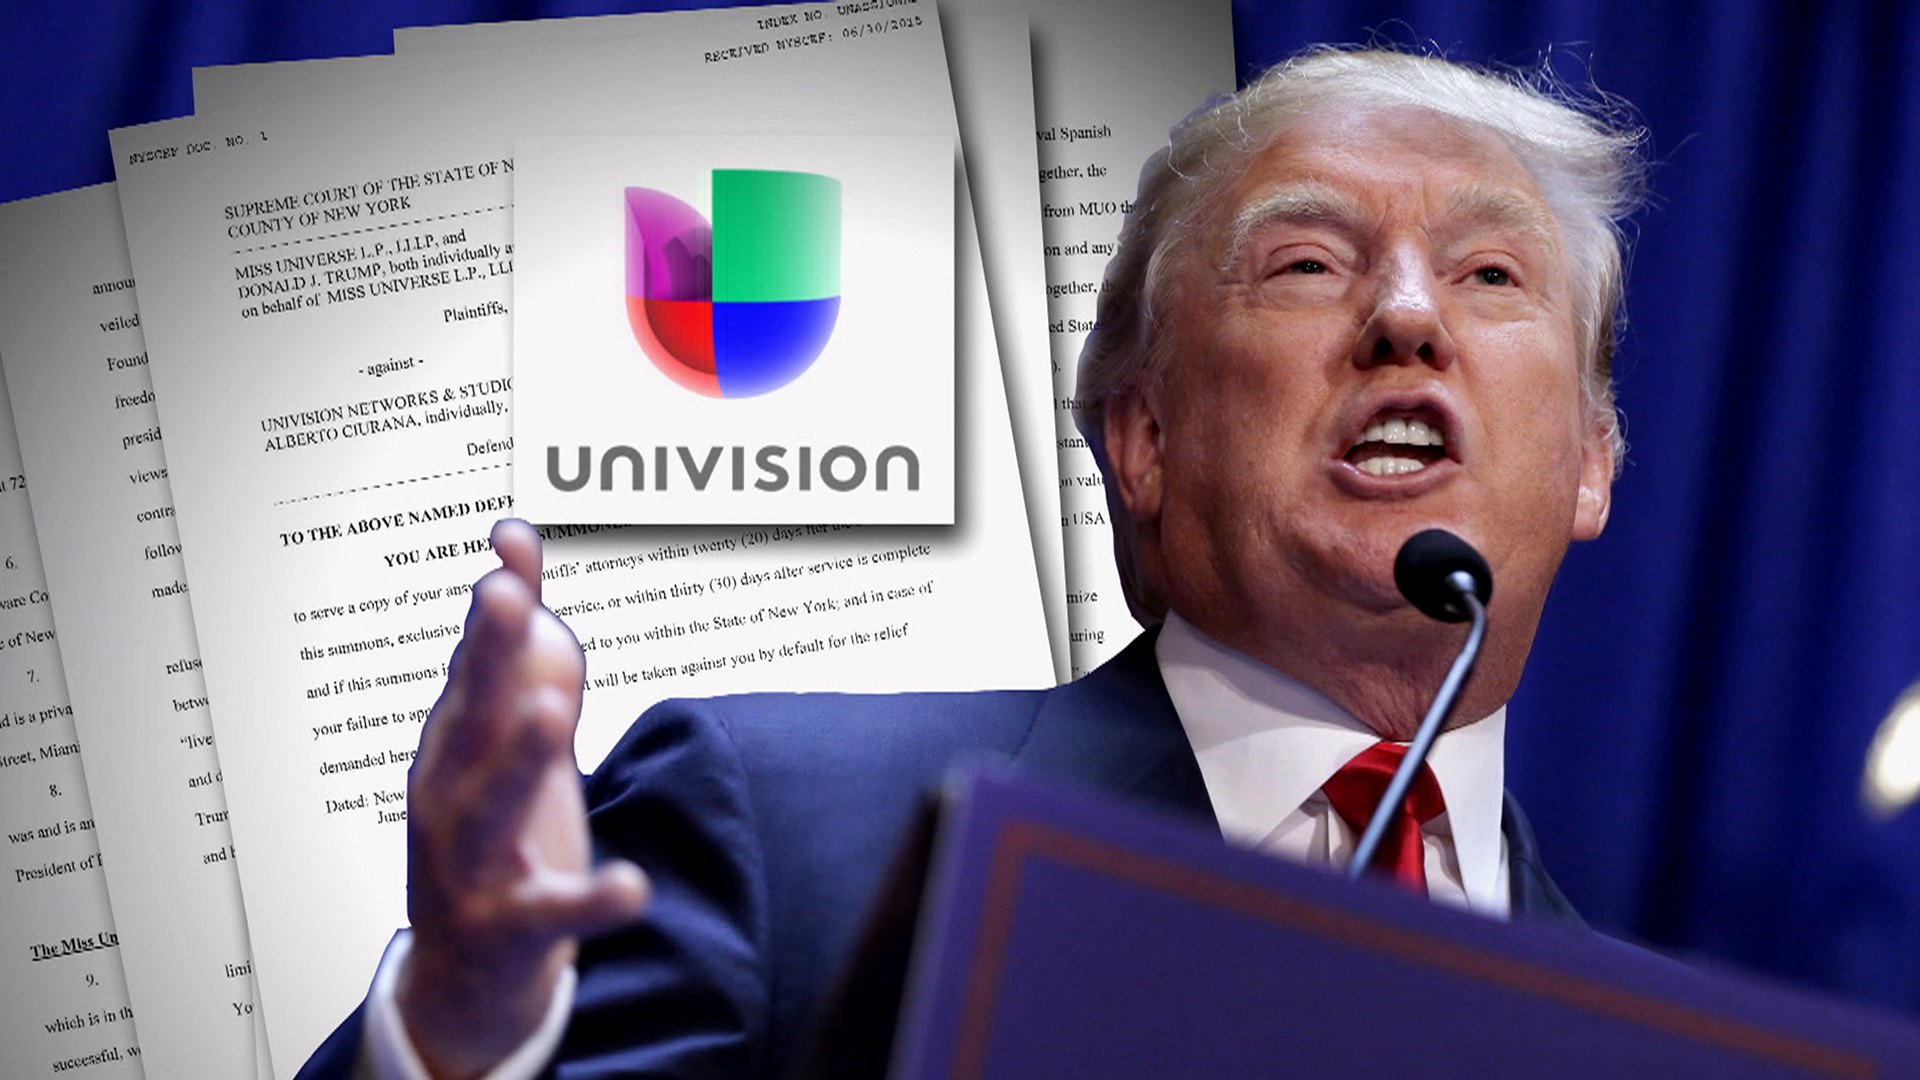 Univisión abbraccia Trump, svolta a destra del grande gruppo televisivo?